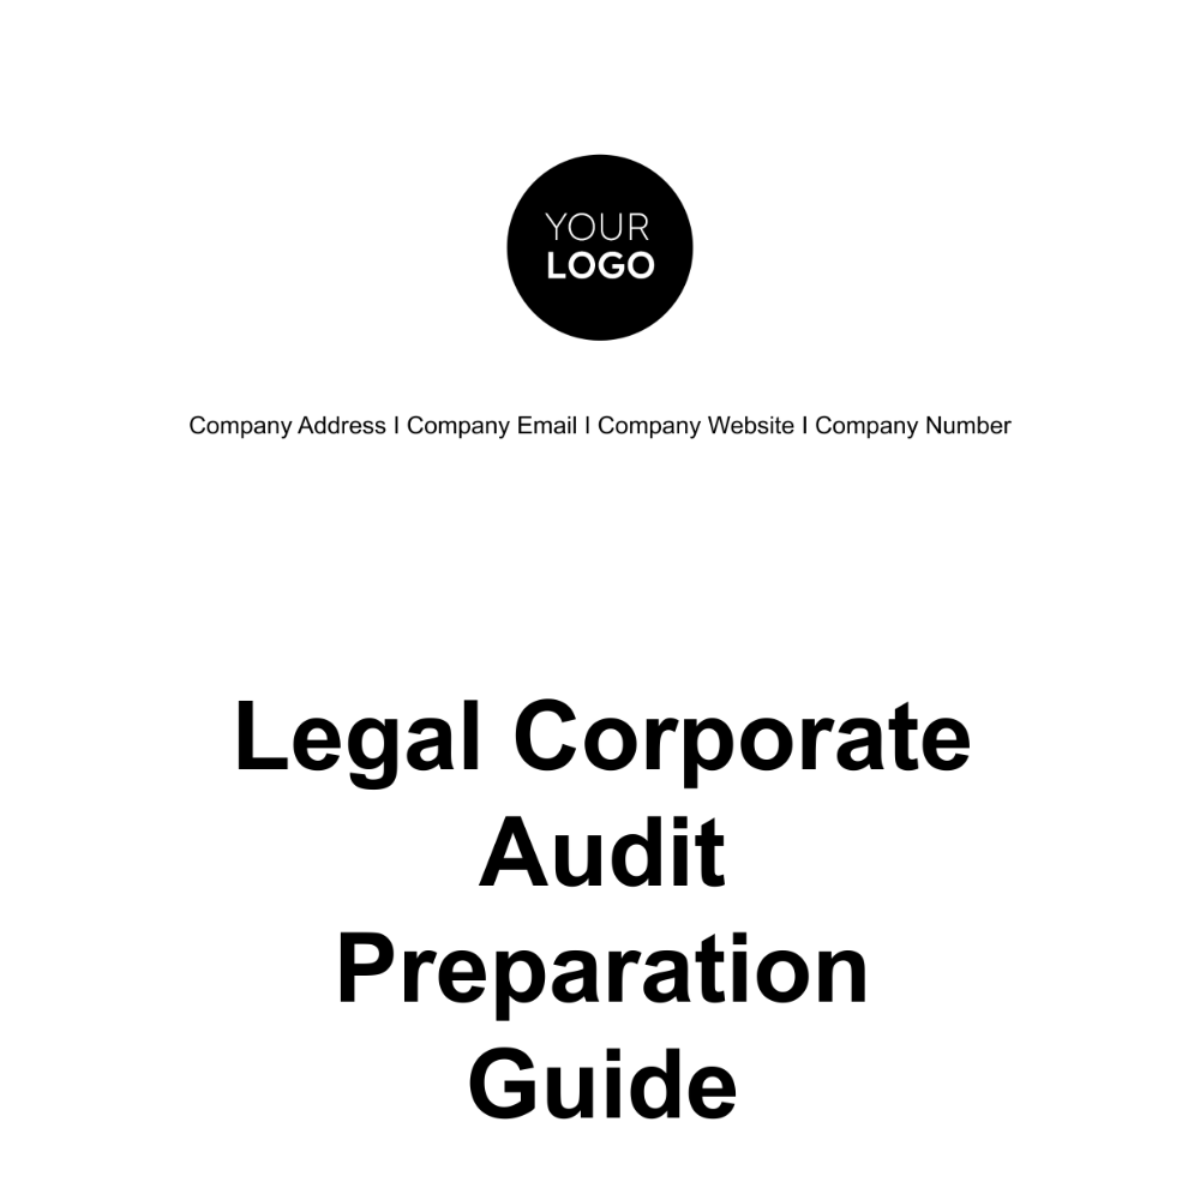 Legal Corporate Audit Preparation Guide Template